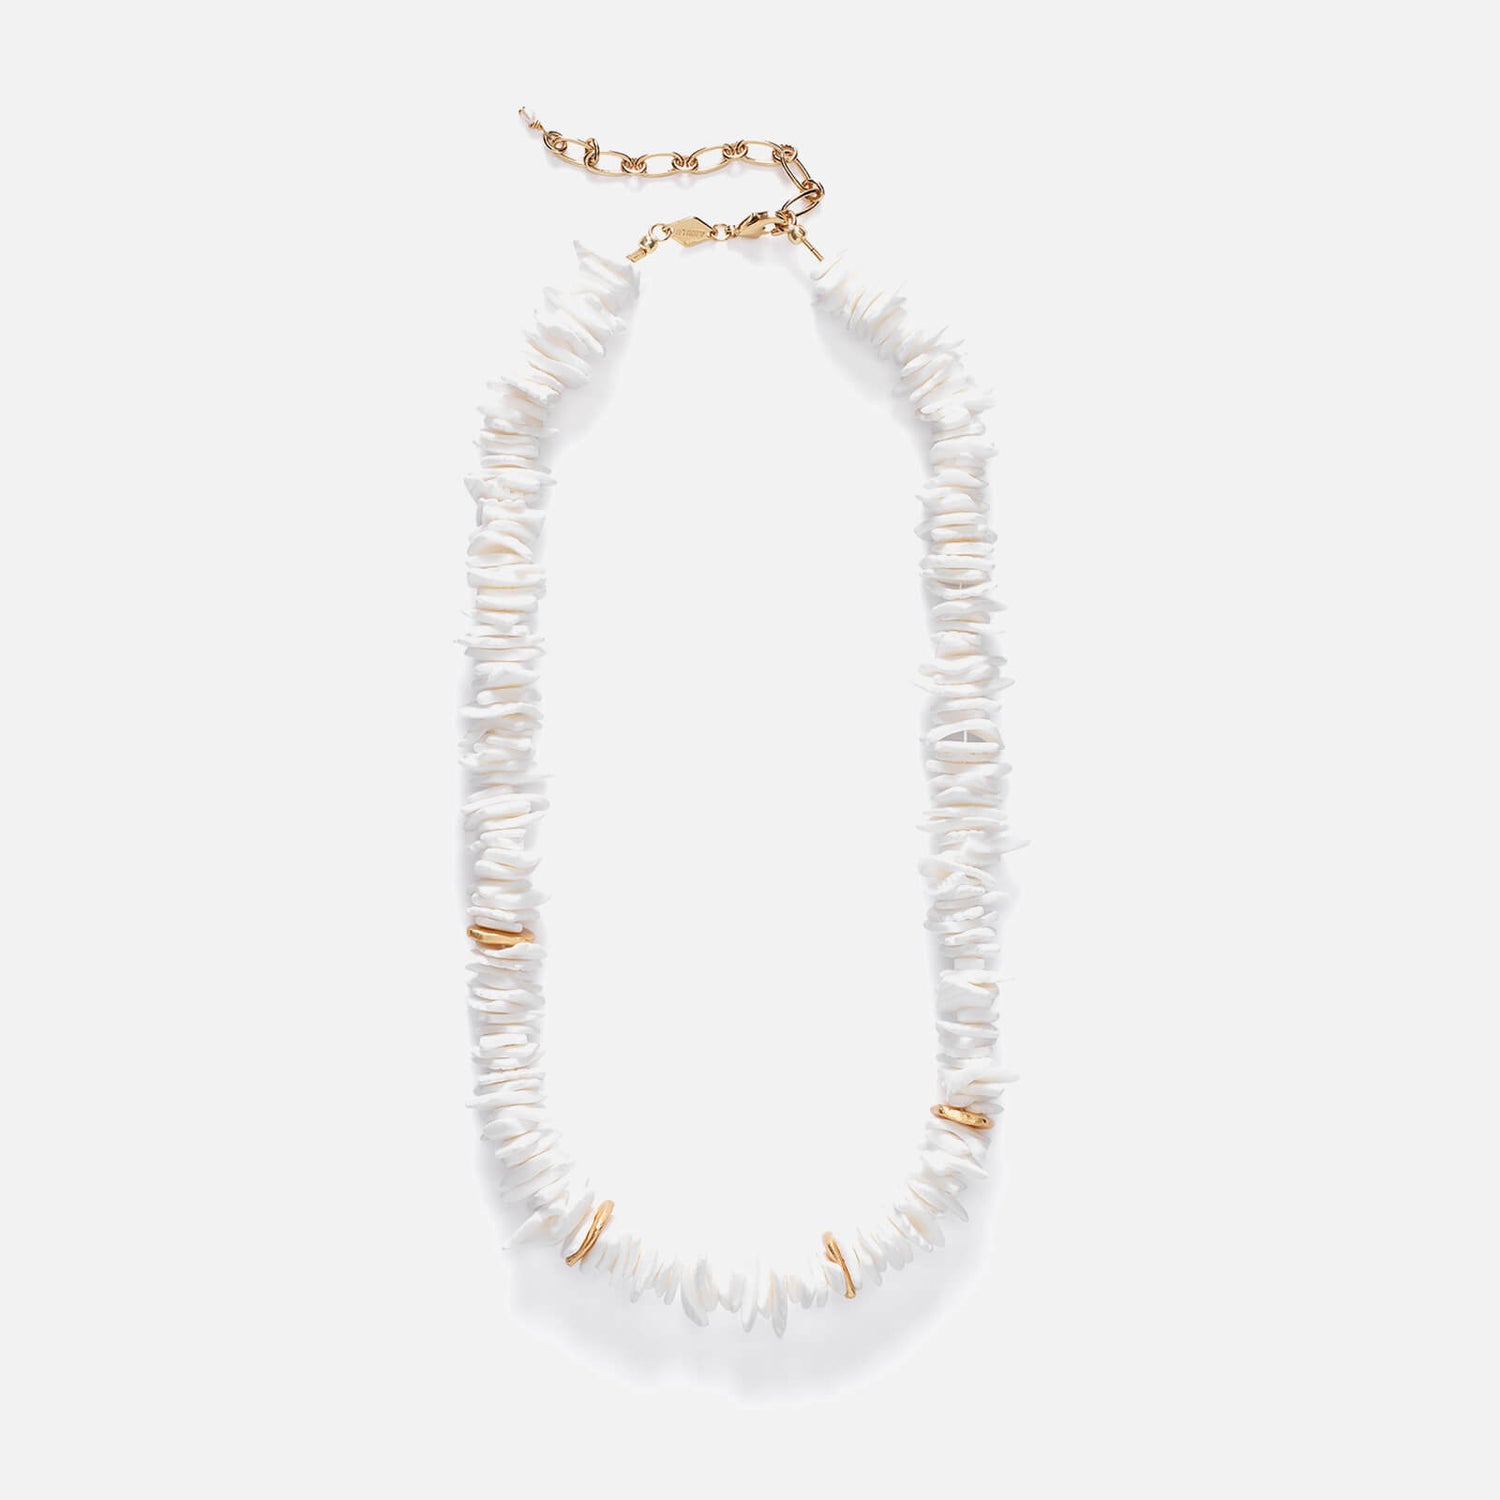 Anni Lu Puka Shell and Glass Bead Necklace